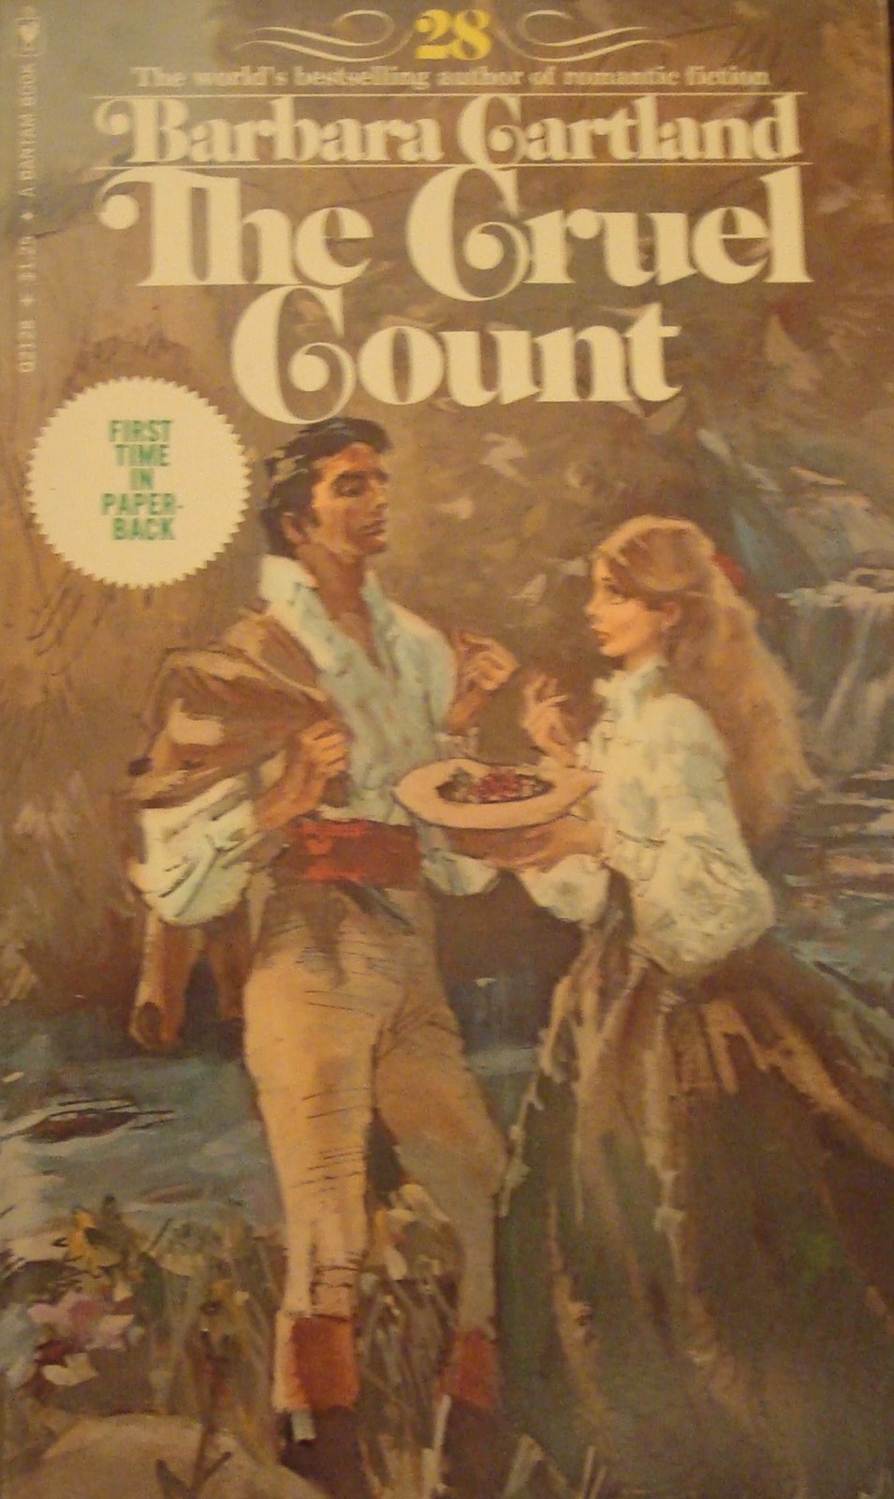 The Cruel Count (Bantam Series No. 28) by Barbara Cartland